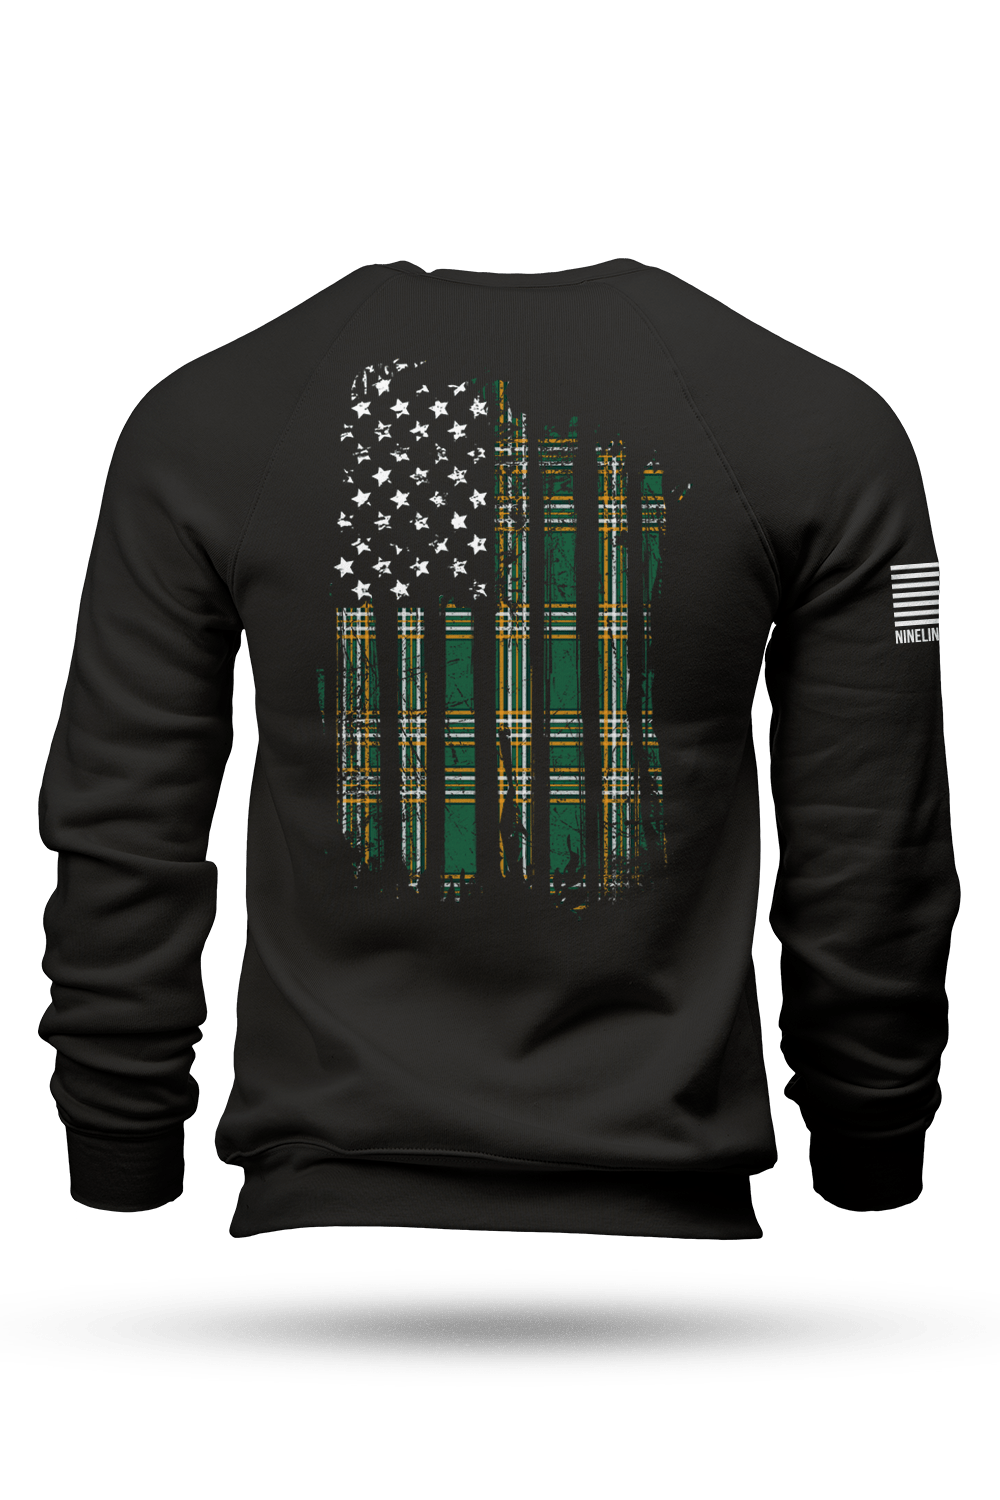 Sweatshirt - Irish America - Nine Line Apparel